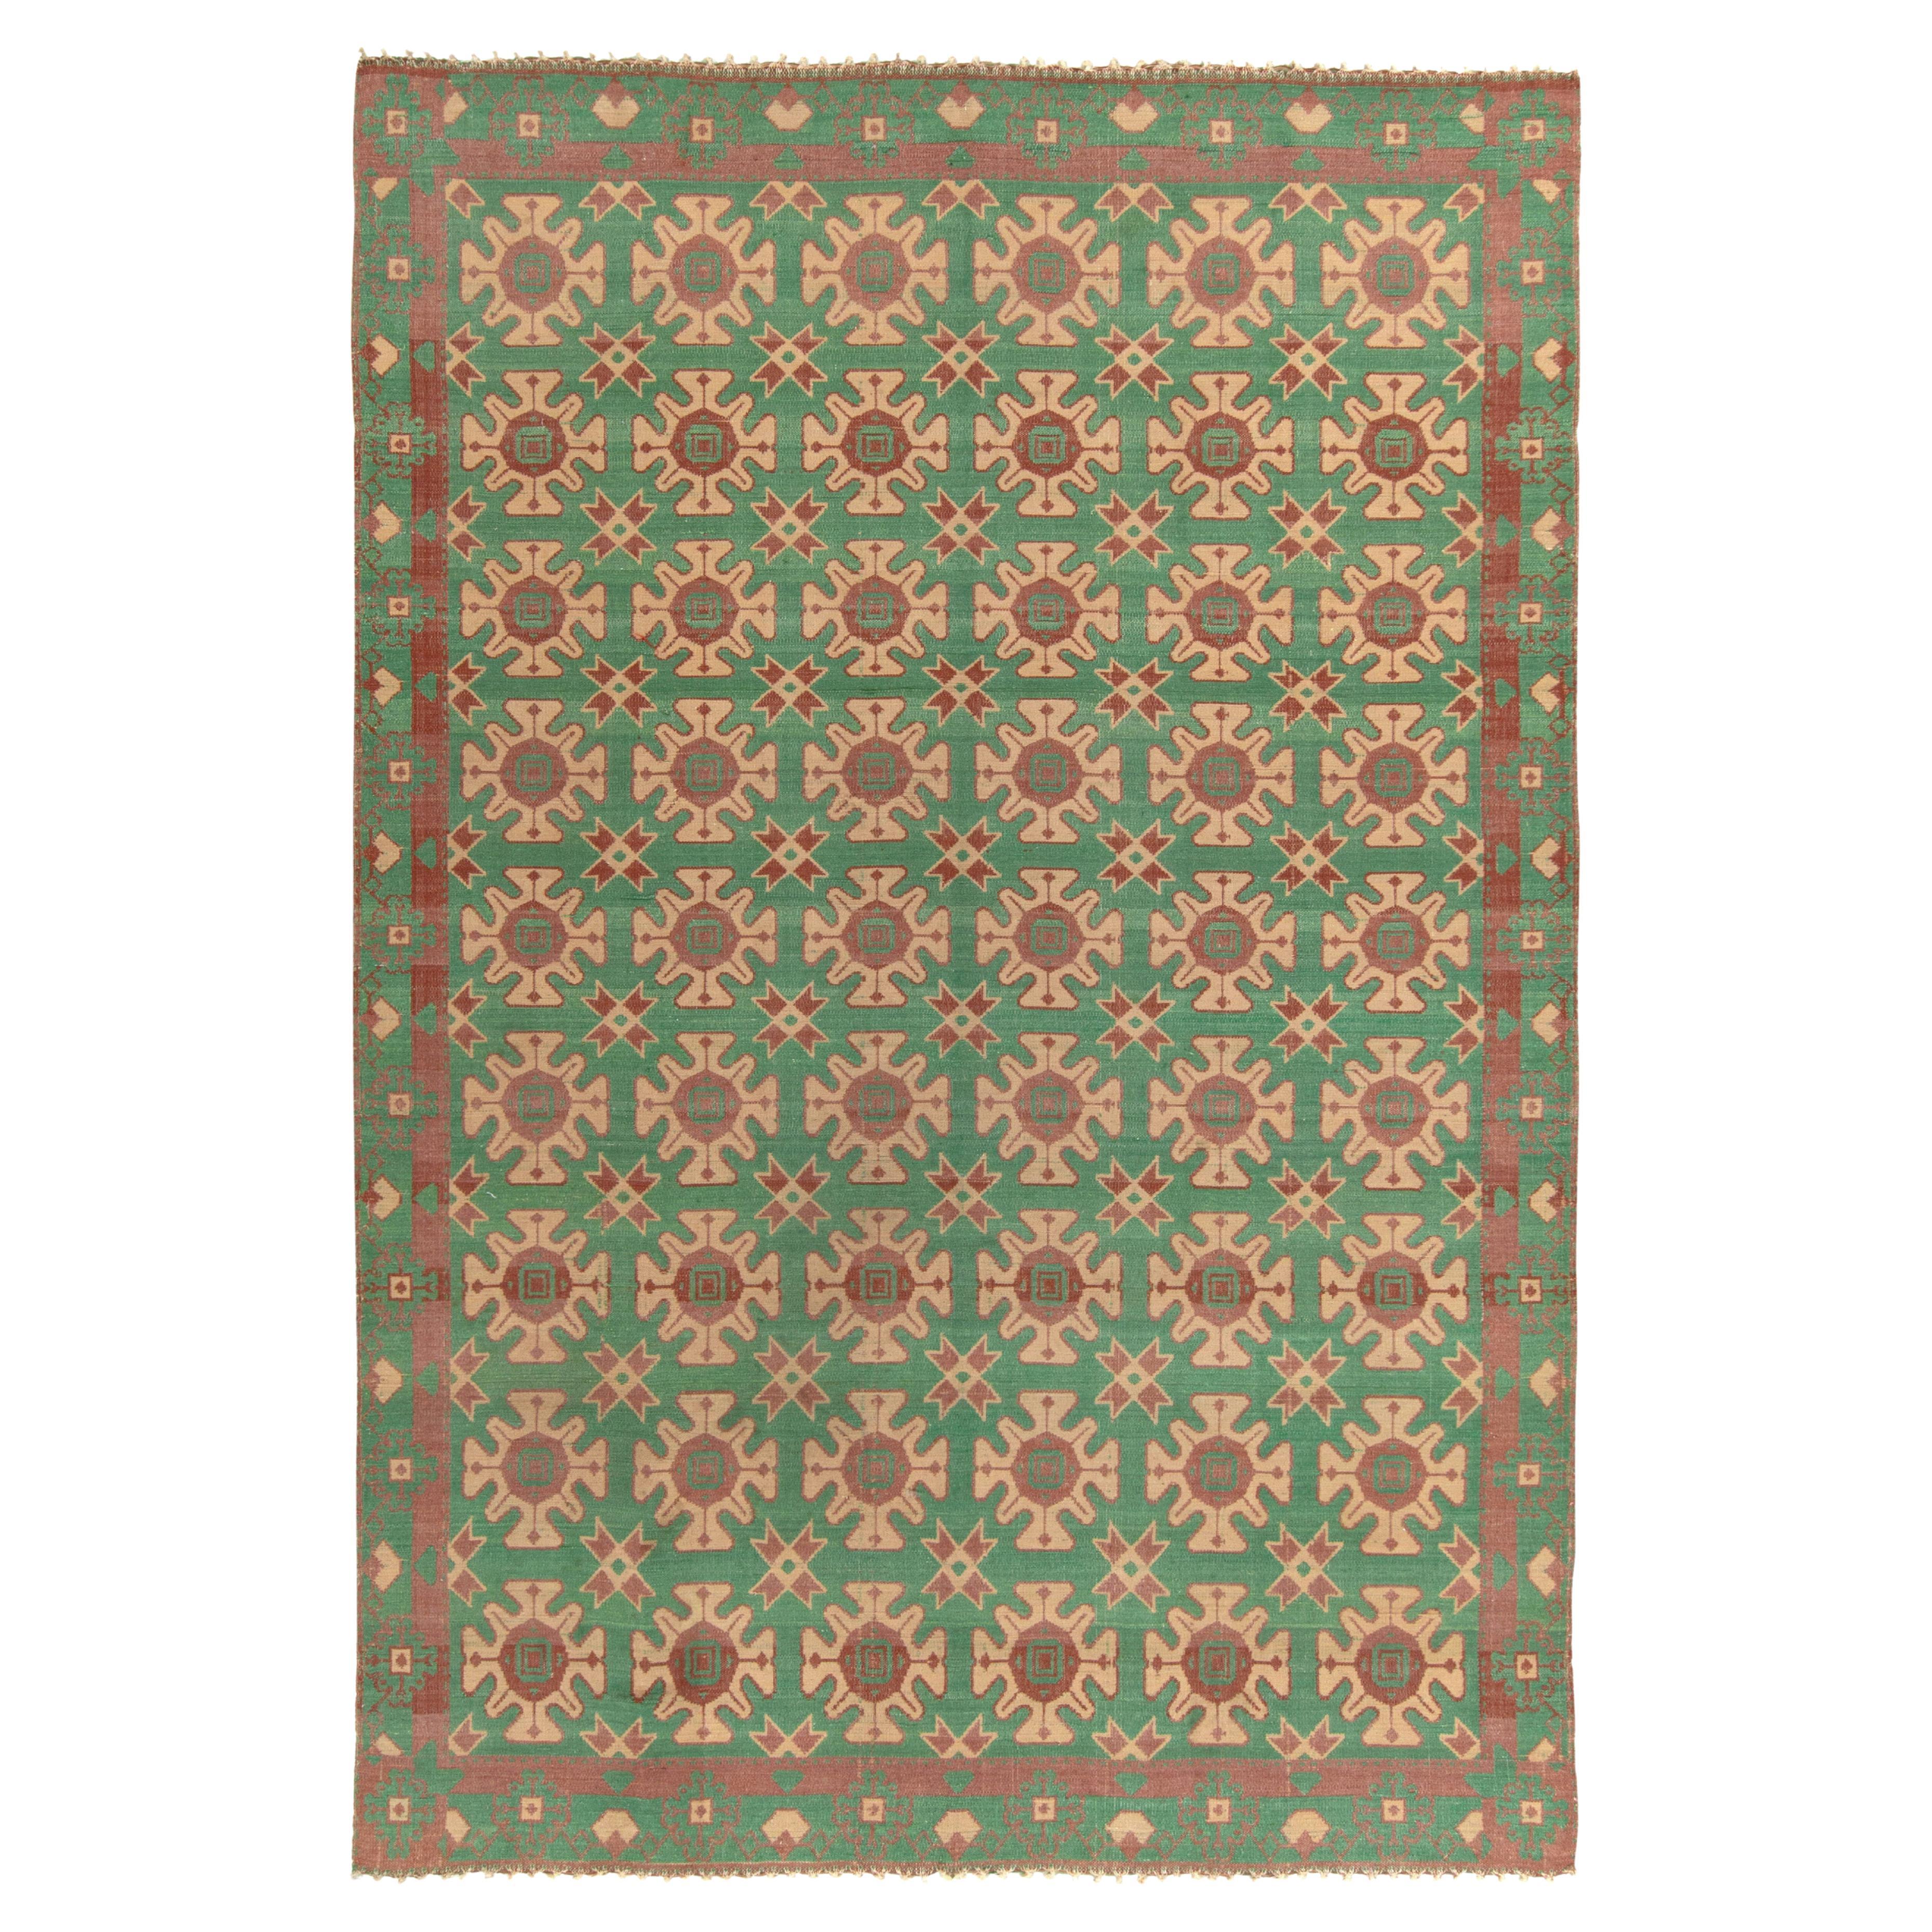 Handwoven Vintage Kilim Rug in Beige, Green Geometric Pattern by Rug & Kilim For Sale